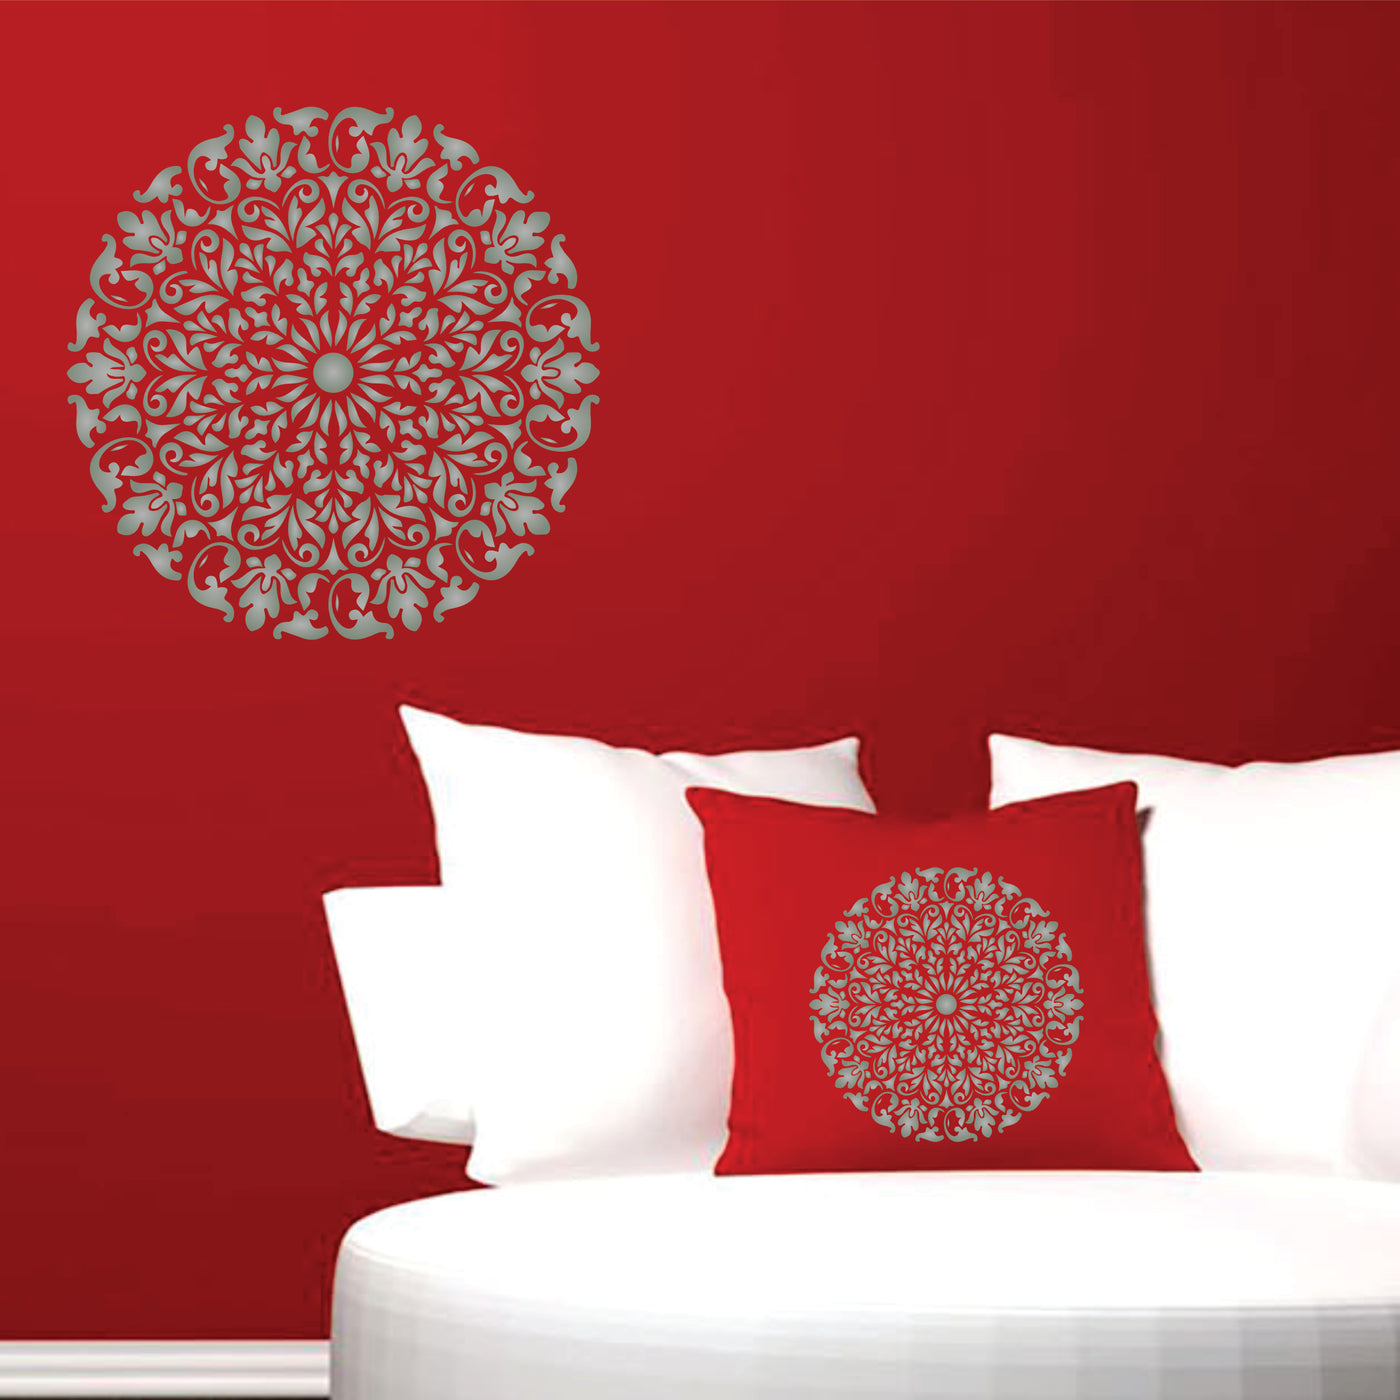 Ceiling Rose Stencil - Mandala Architectural Decorative Element